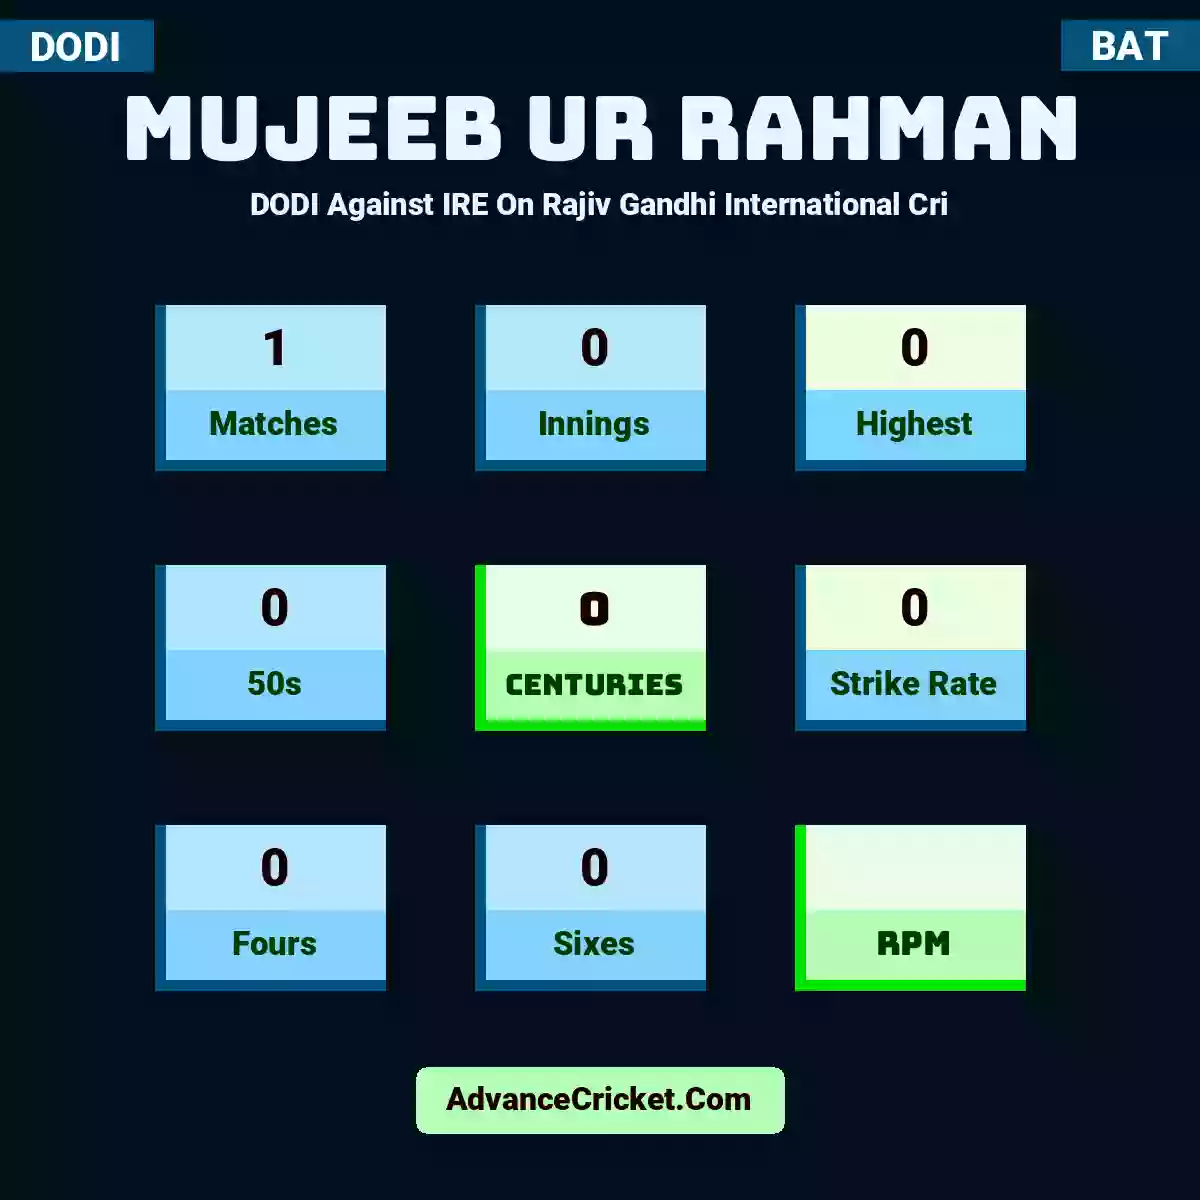 Mujeeb Ur Rahman DODI  Against IRE On Rajiv Gandhi International Cri, Mujeeb Ur Rahman played 1 matches, scored 0 runs as highest, 0 half-centuries, and 0 centuries, with a strike rate of 0. M.Rahman hit 0 fours and 0 sixes.